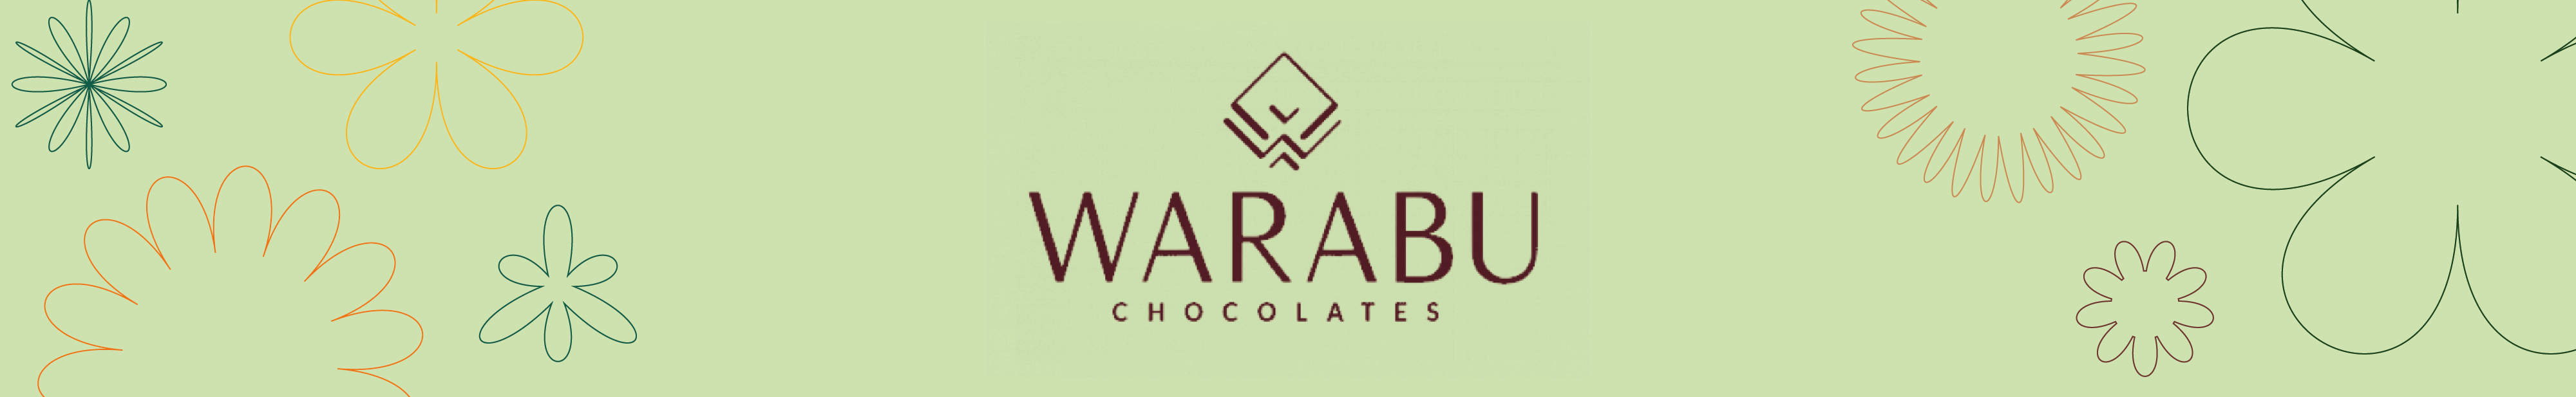 Warabu Chocolates